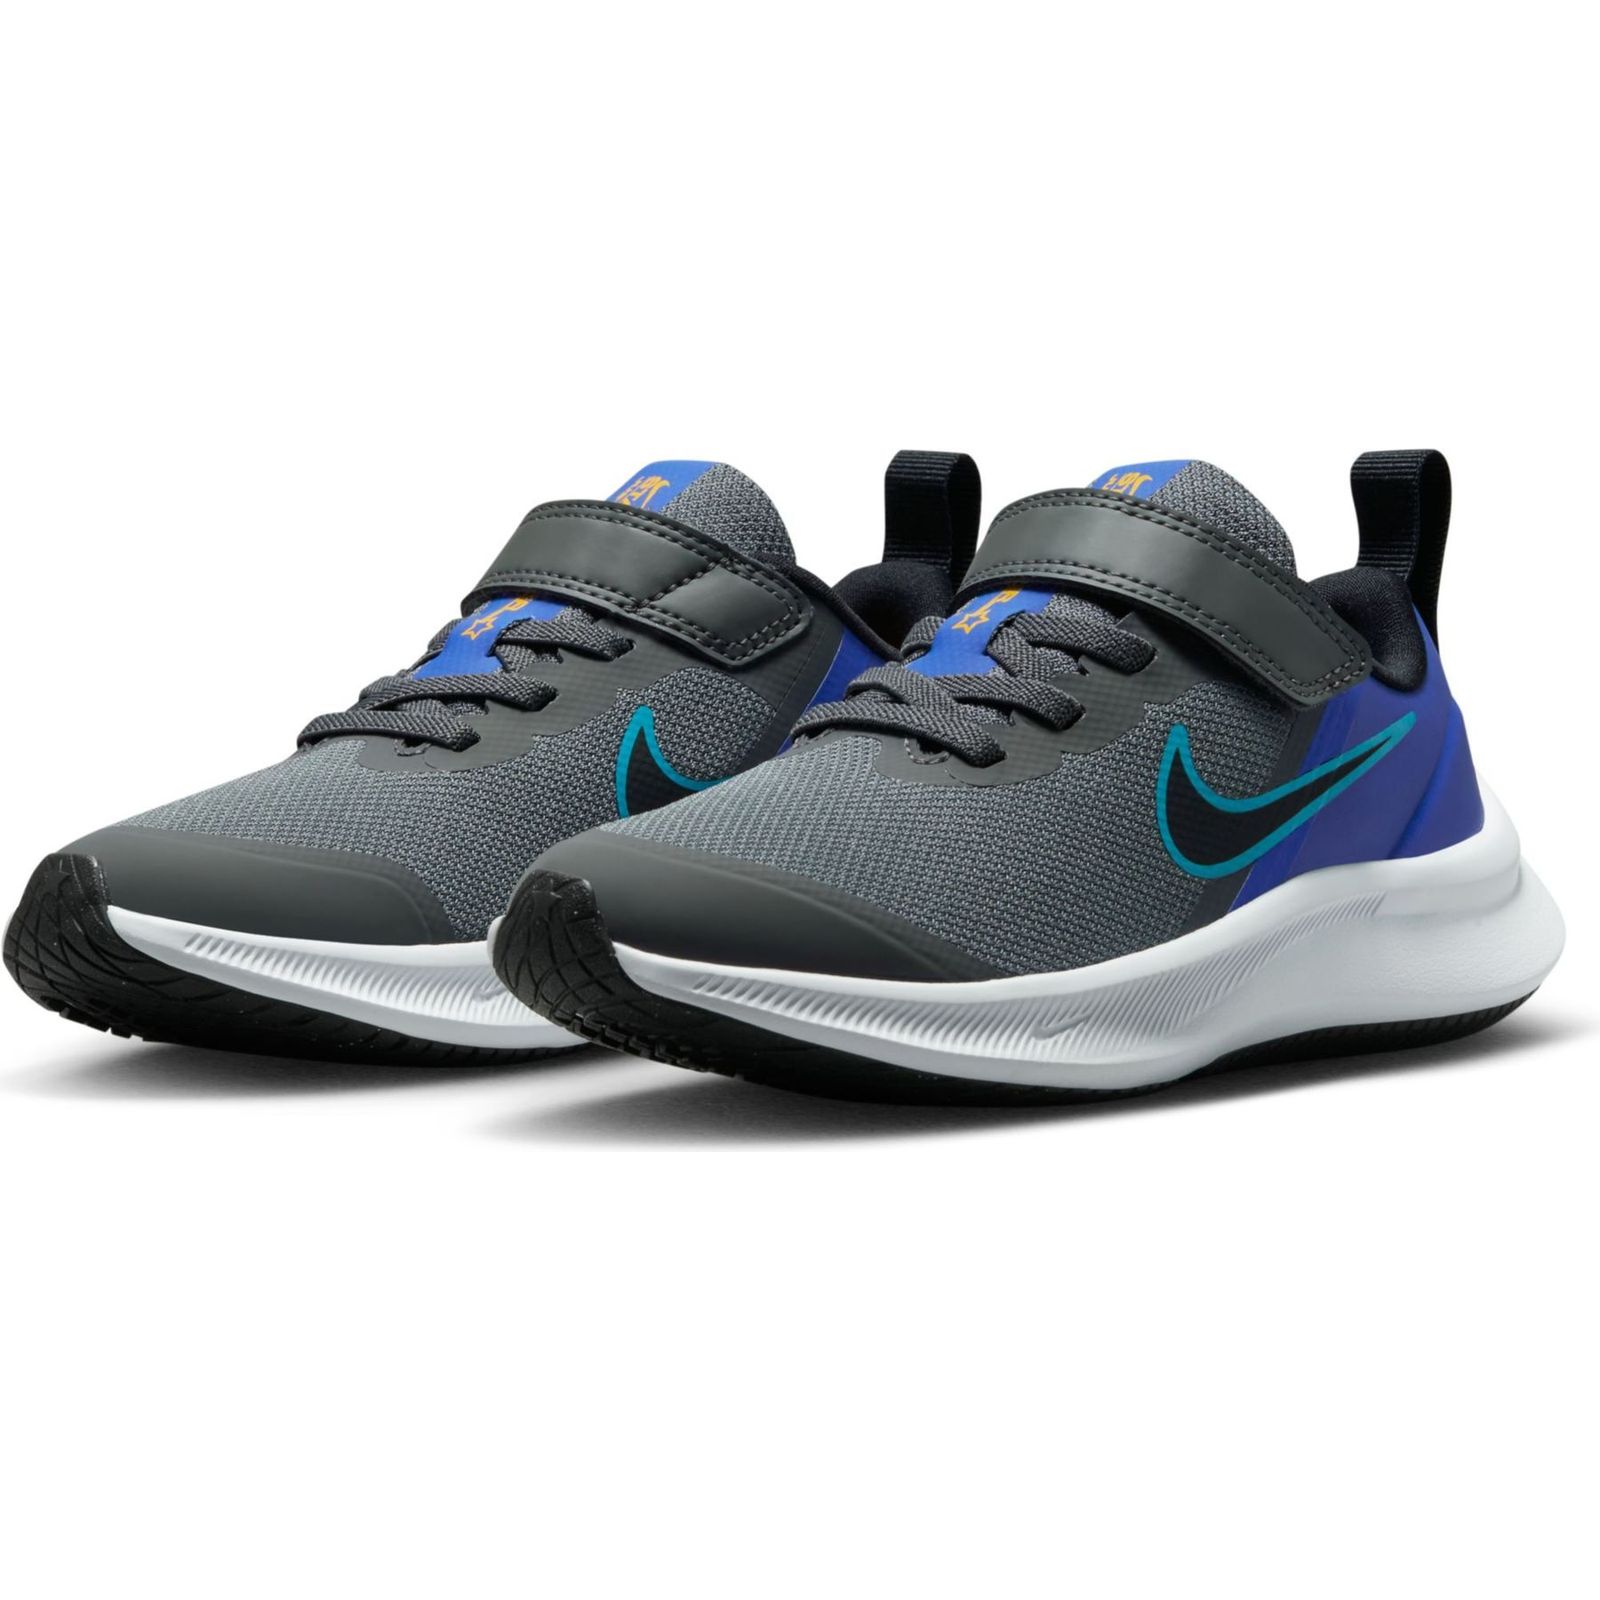 Kids bei iron kaufen Little grey/black-blue low Runner lig jetzt Nike 3 Nike Shoe Star Berger Sneaker